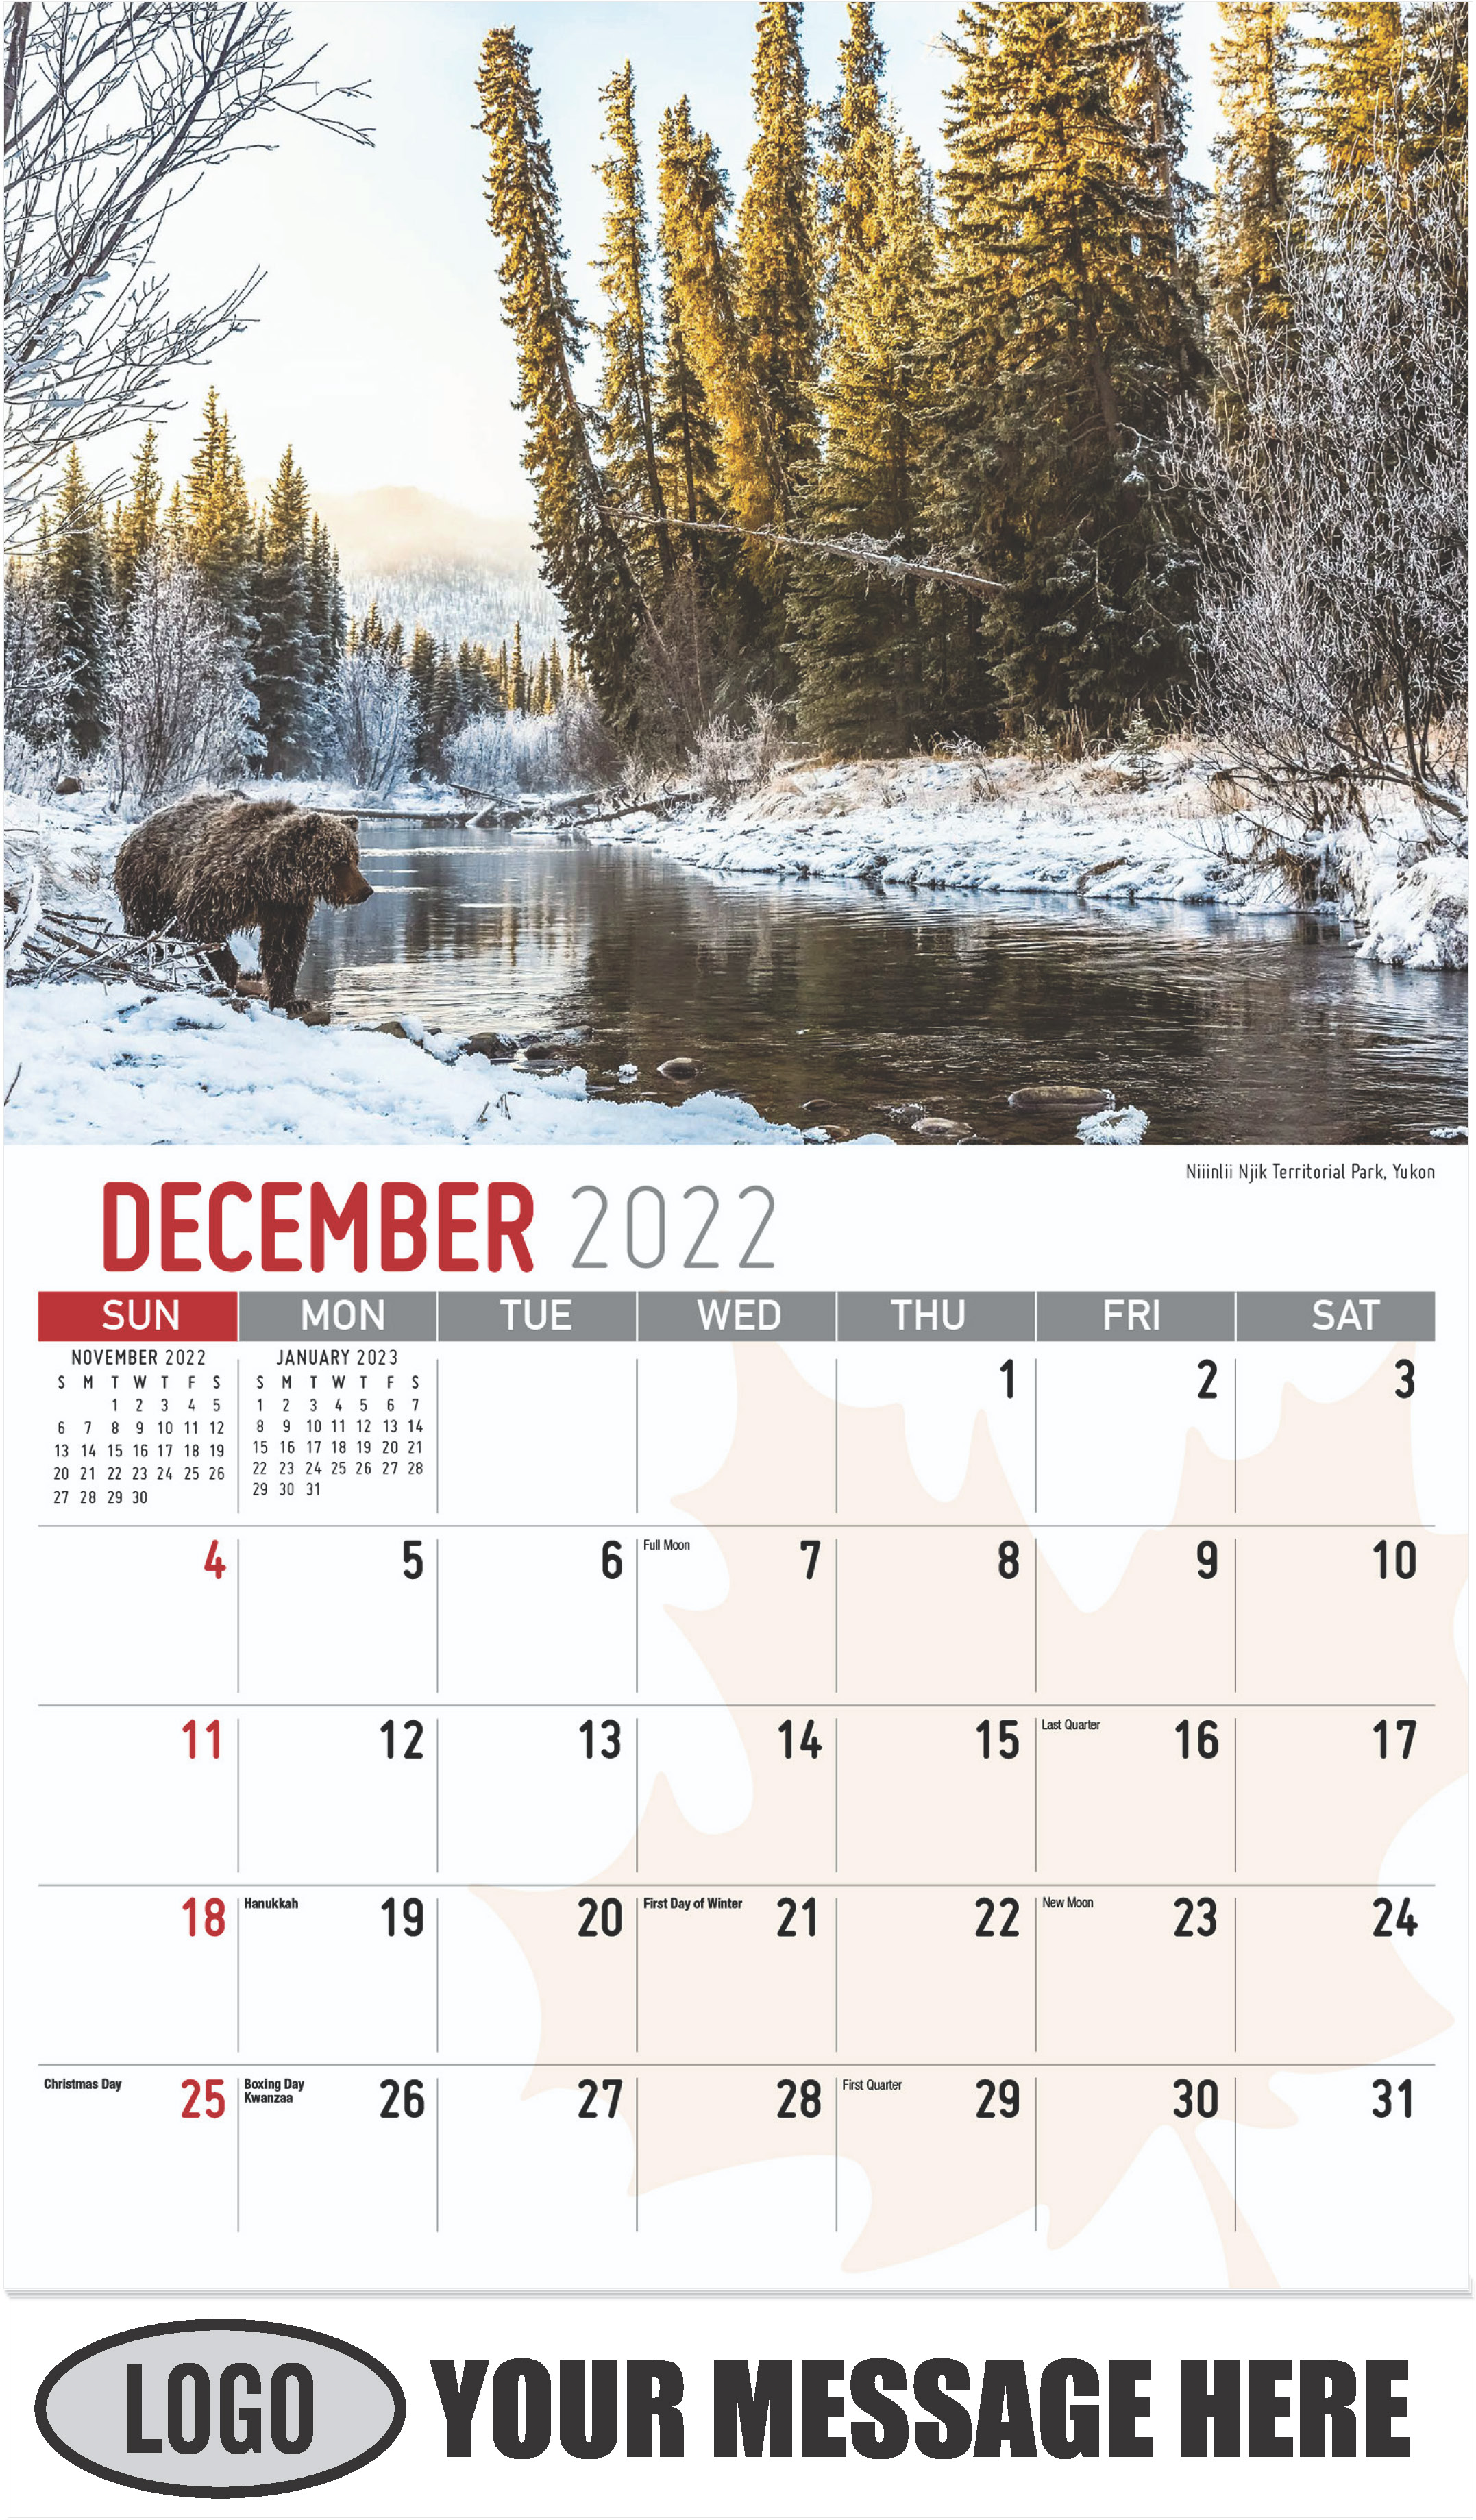 Niiinlii Njik Territorial Park, Yukon - December 2022 - Scenes of Canada 2023 Promotional Calendar